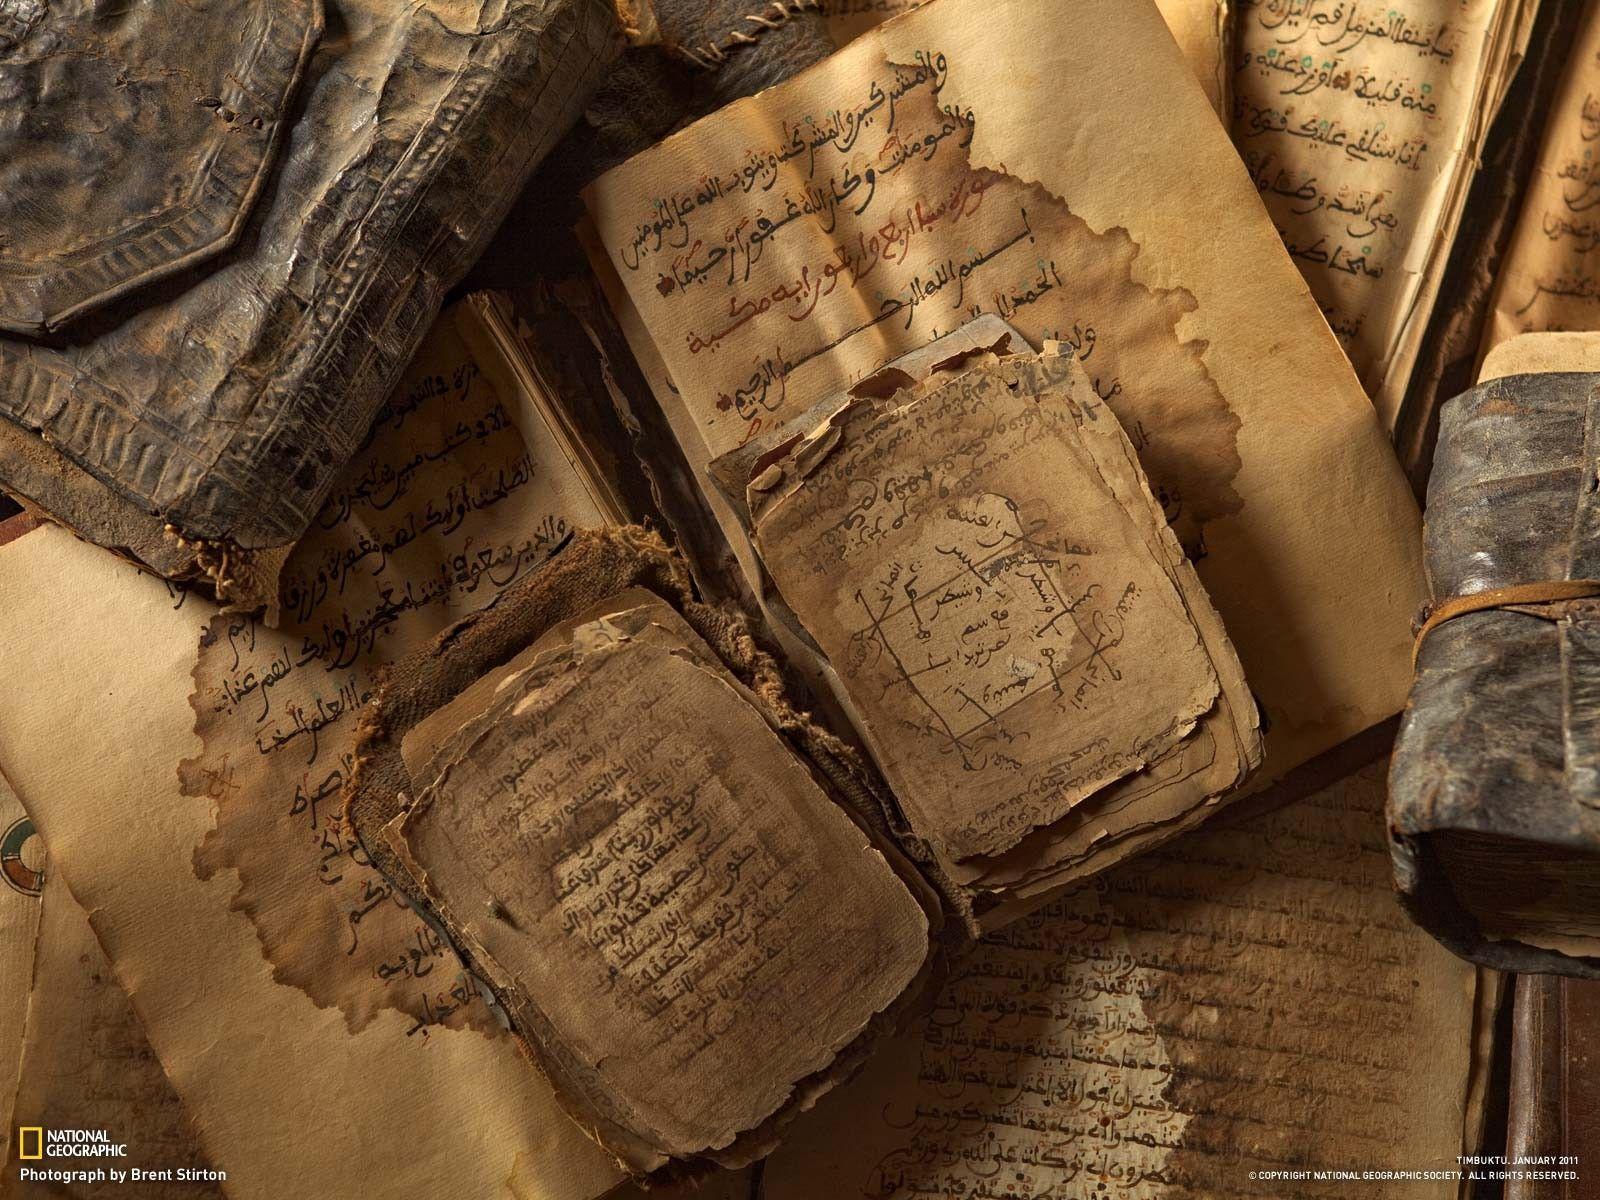 Wallpaper, wood, books, paper, National Geographic, Islam, Arabic